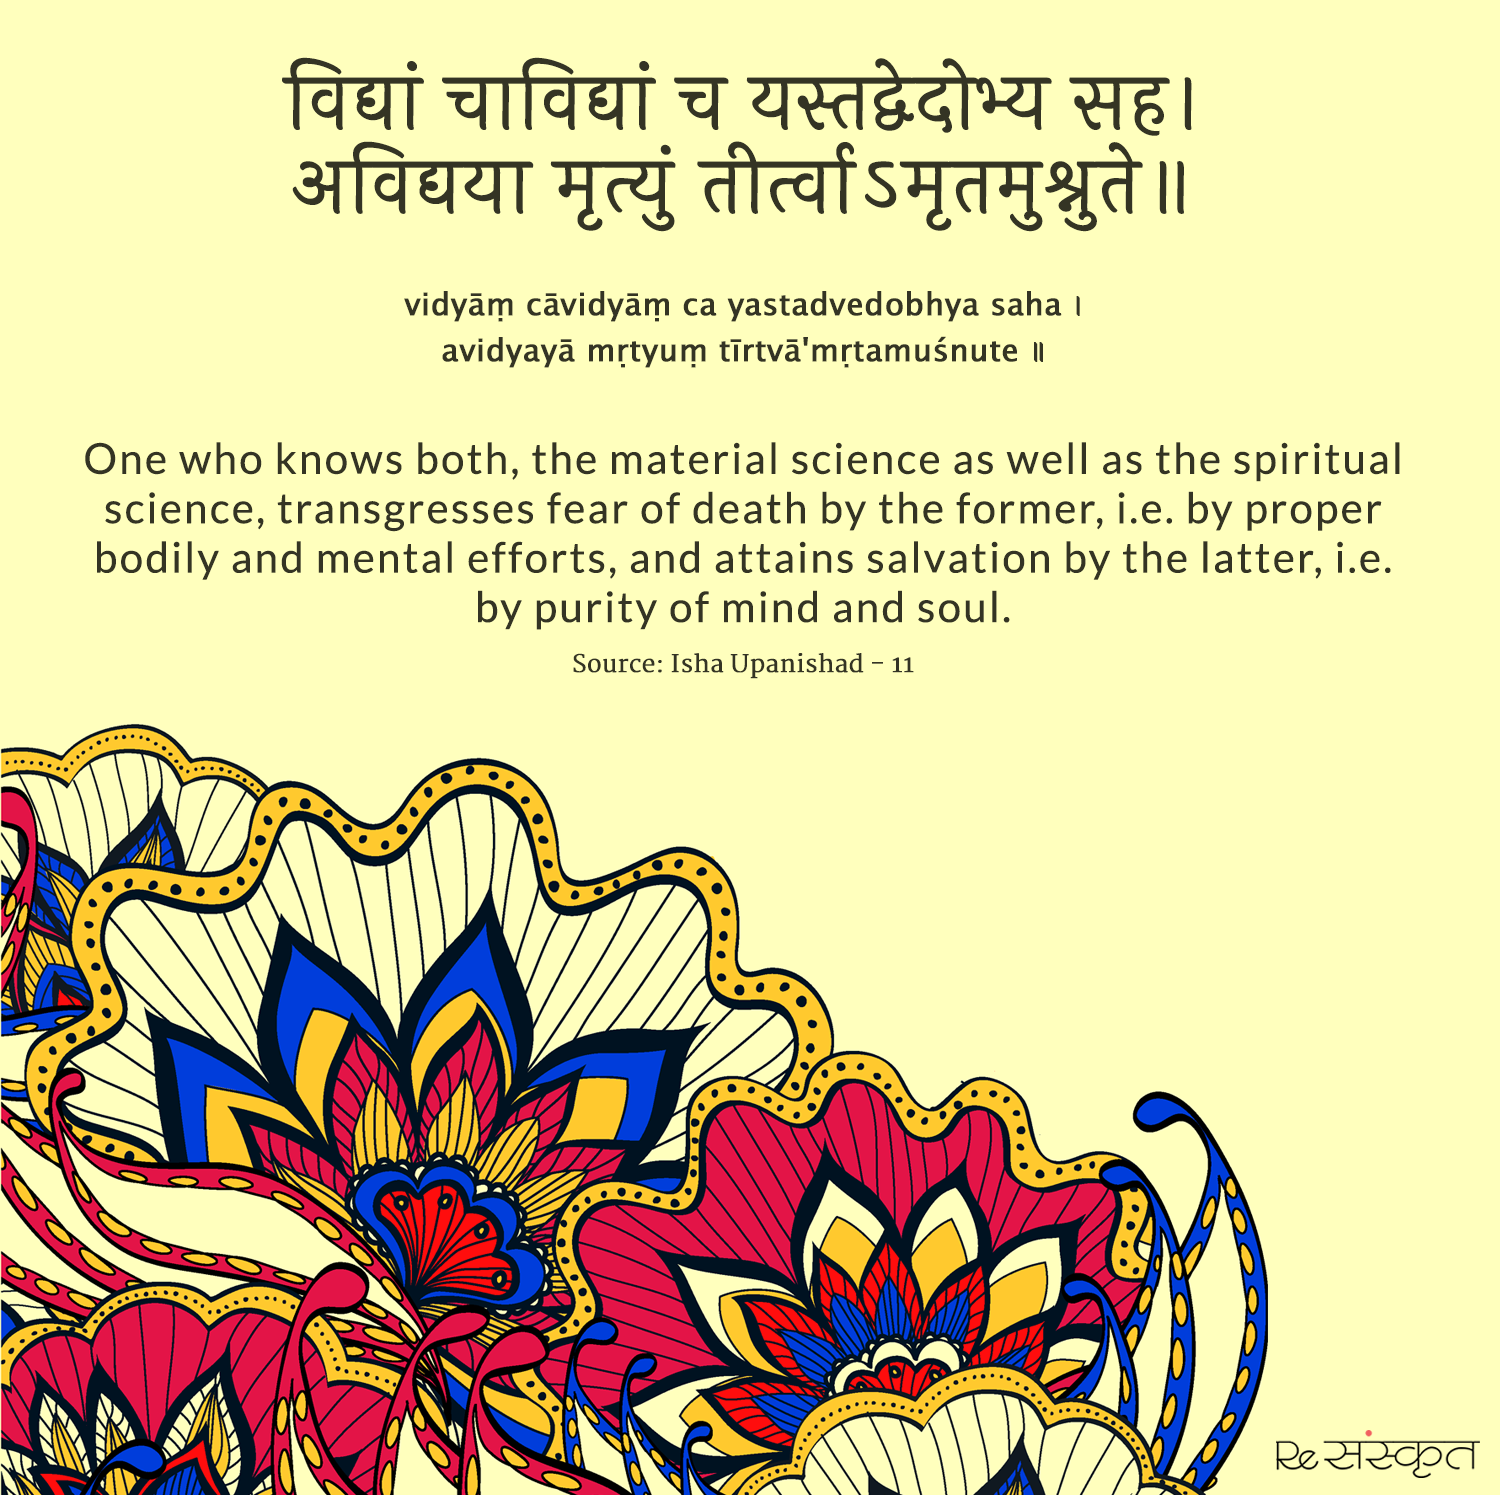 Sanskrit quote on salvation